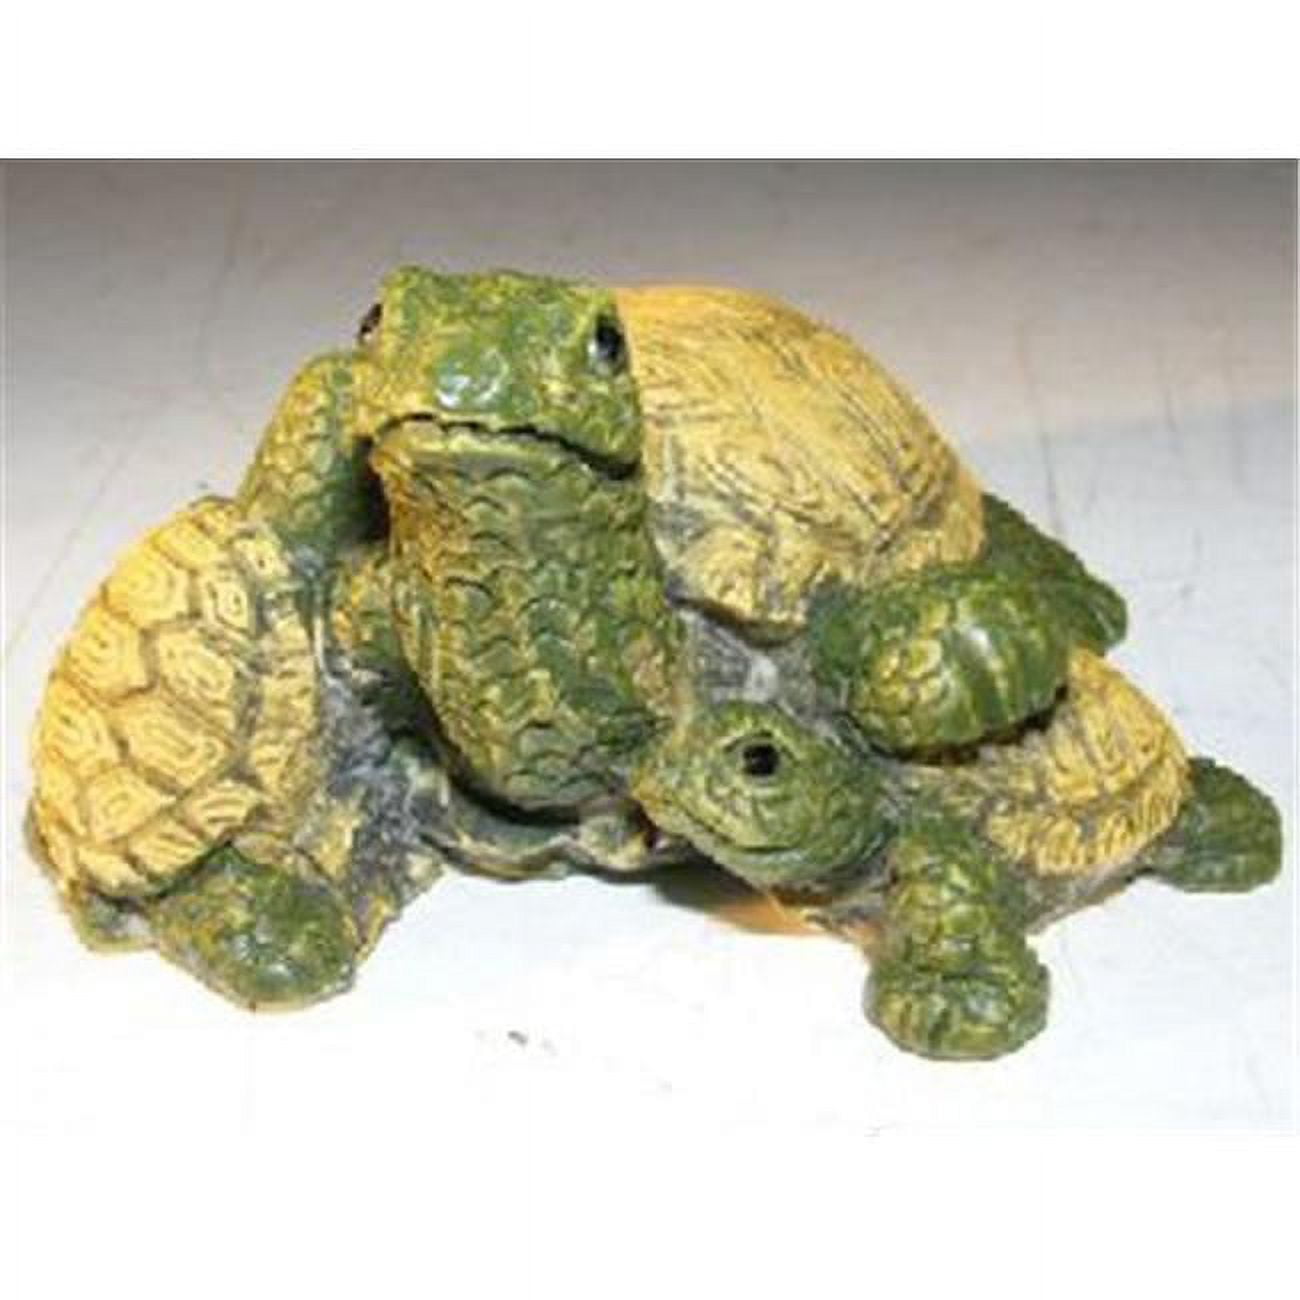 Picture of Bonsai Boy e3091 Miniature Turtle Figurine Three Turtles - One Climbing On Back